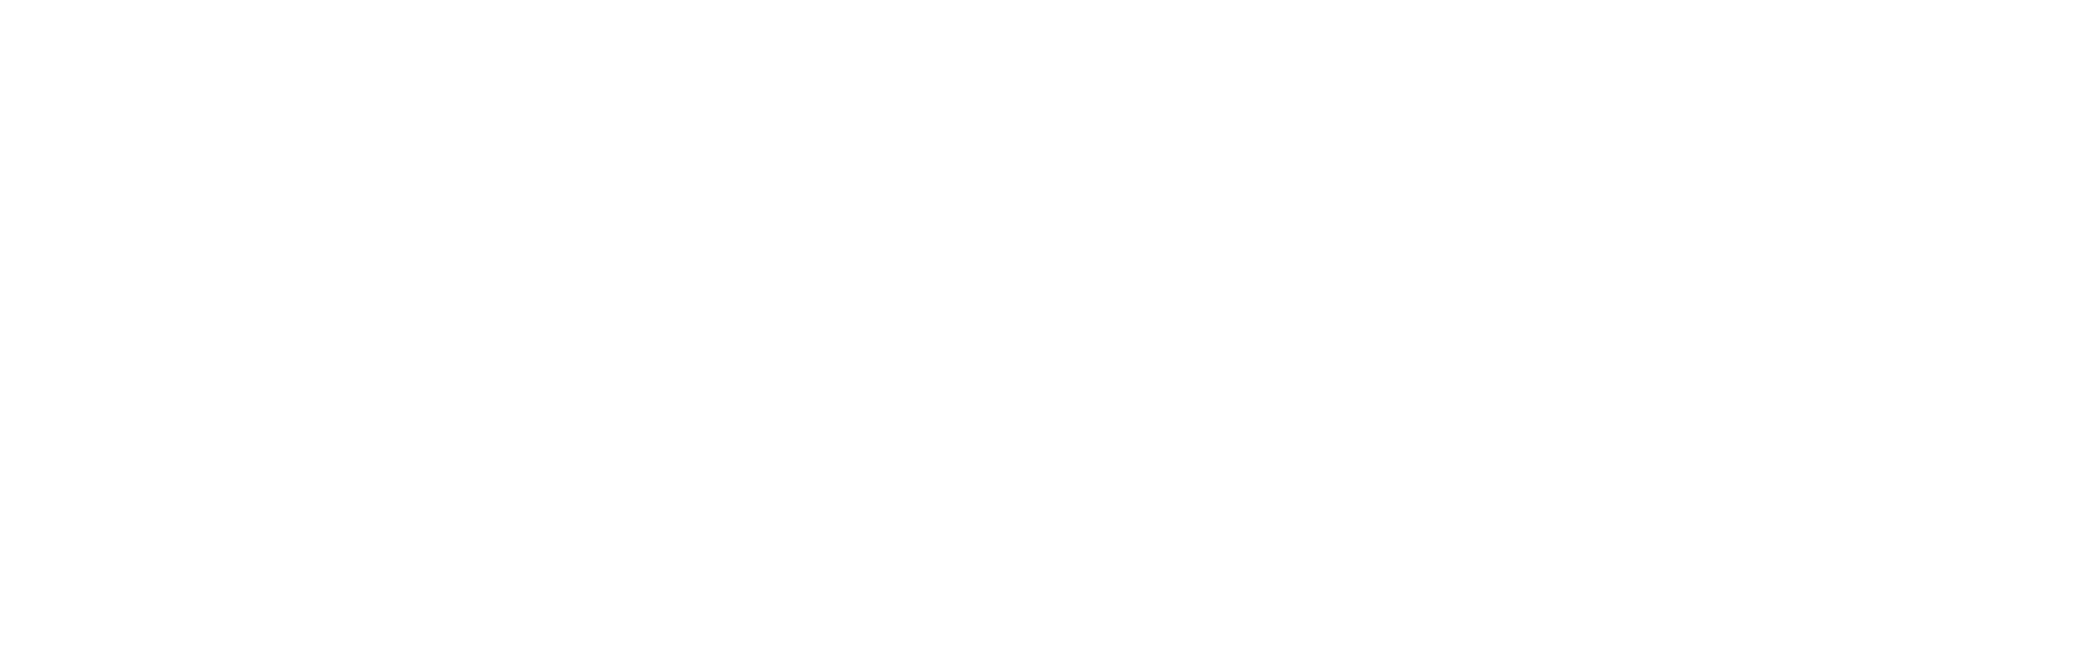 Amazon Music Logo - Highest Quality Streaming Audio | Amazon Music HD